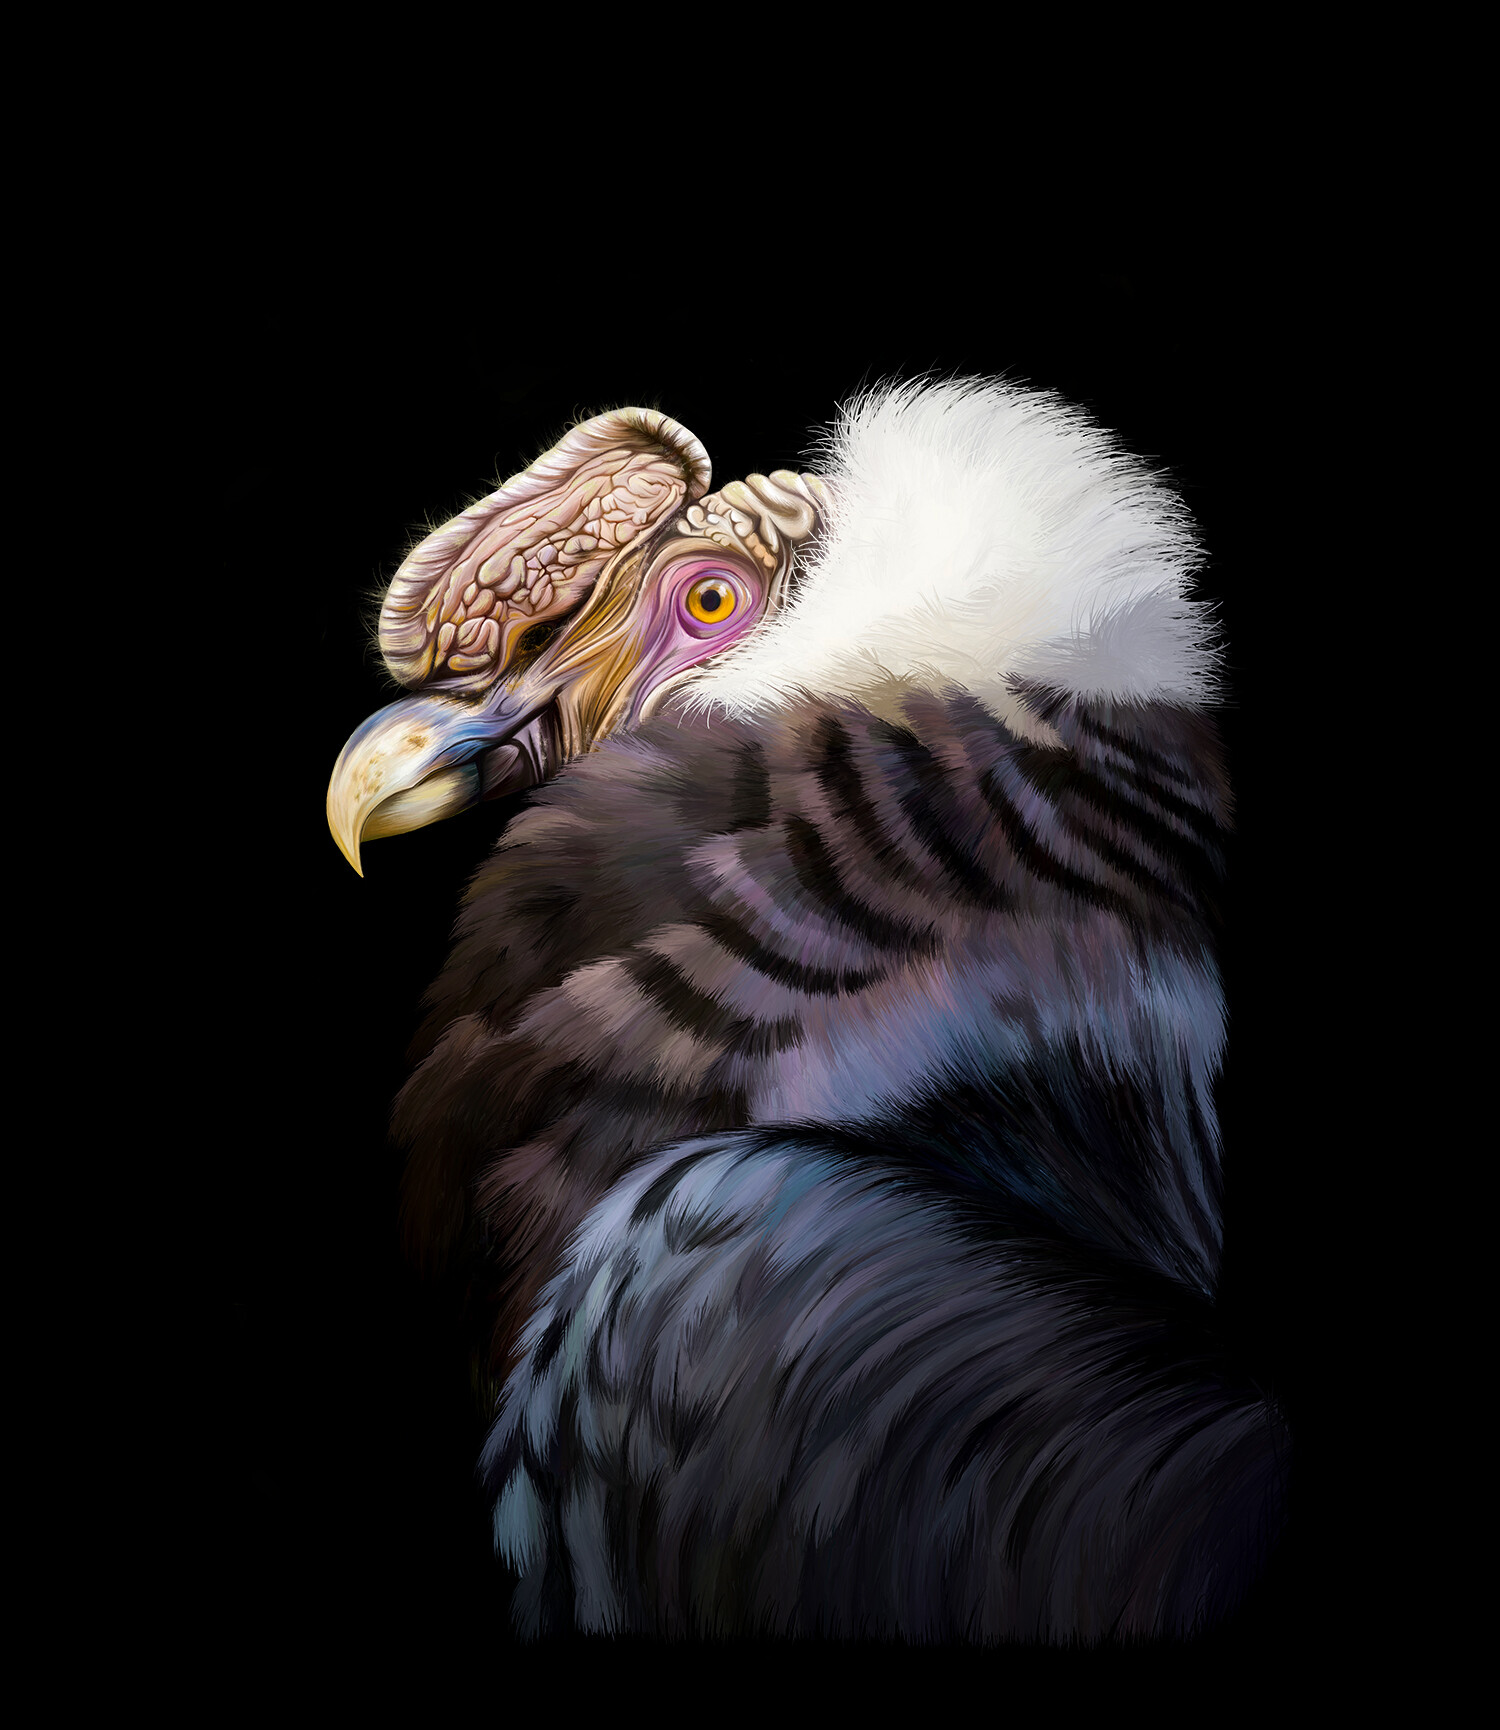 condor painting